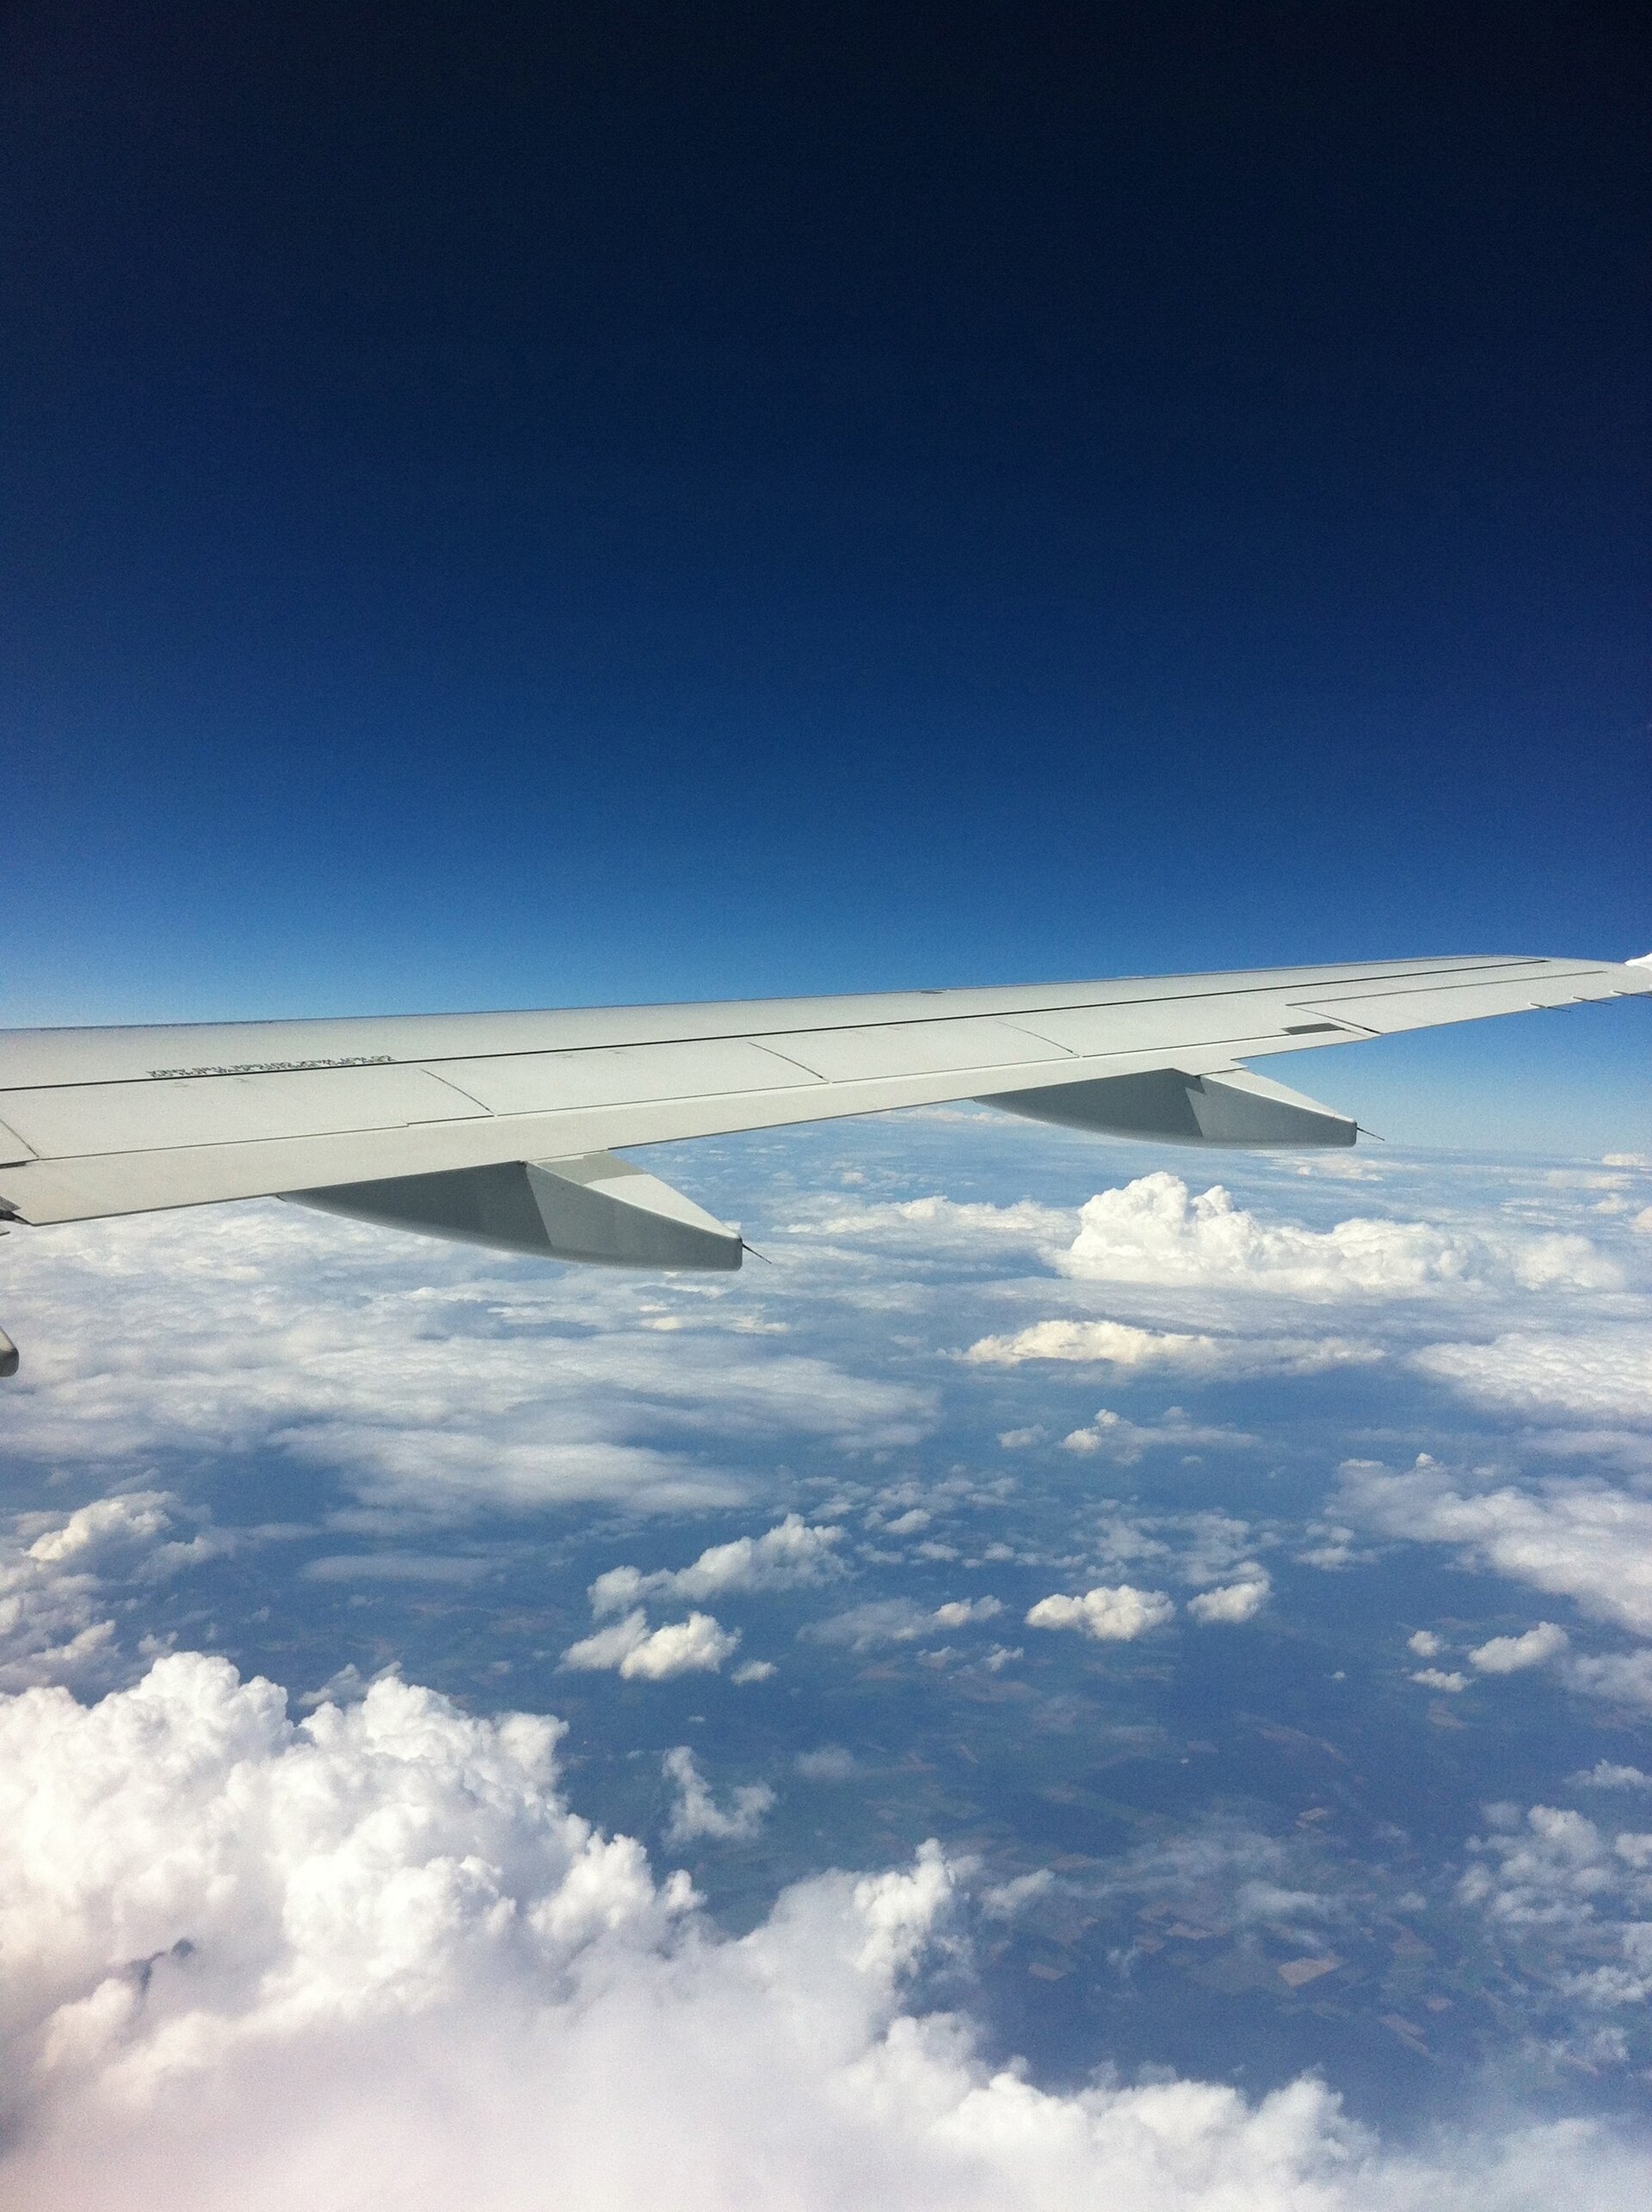 https://www.esa.int/var/esa/storage/images/esa_multimedia/images/2023/07/blue_skies_above_an_aircraft_wing/25022941-3-eng-GB/Blue_skies_above_an_aircraft_wing_pillars.jpg